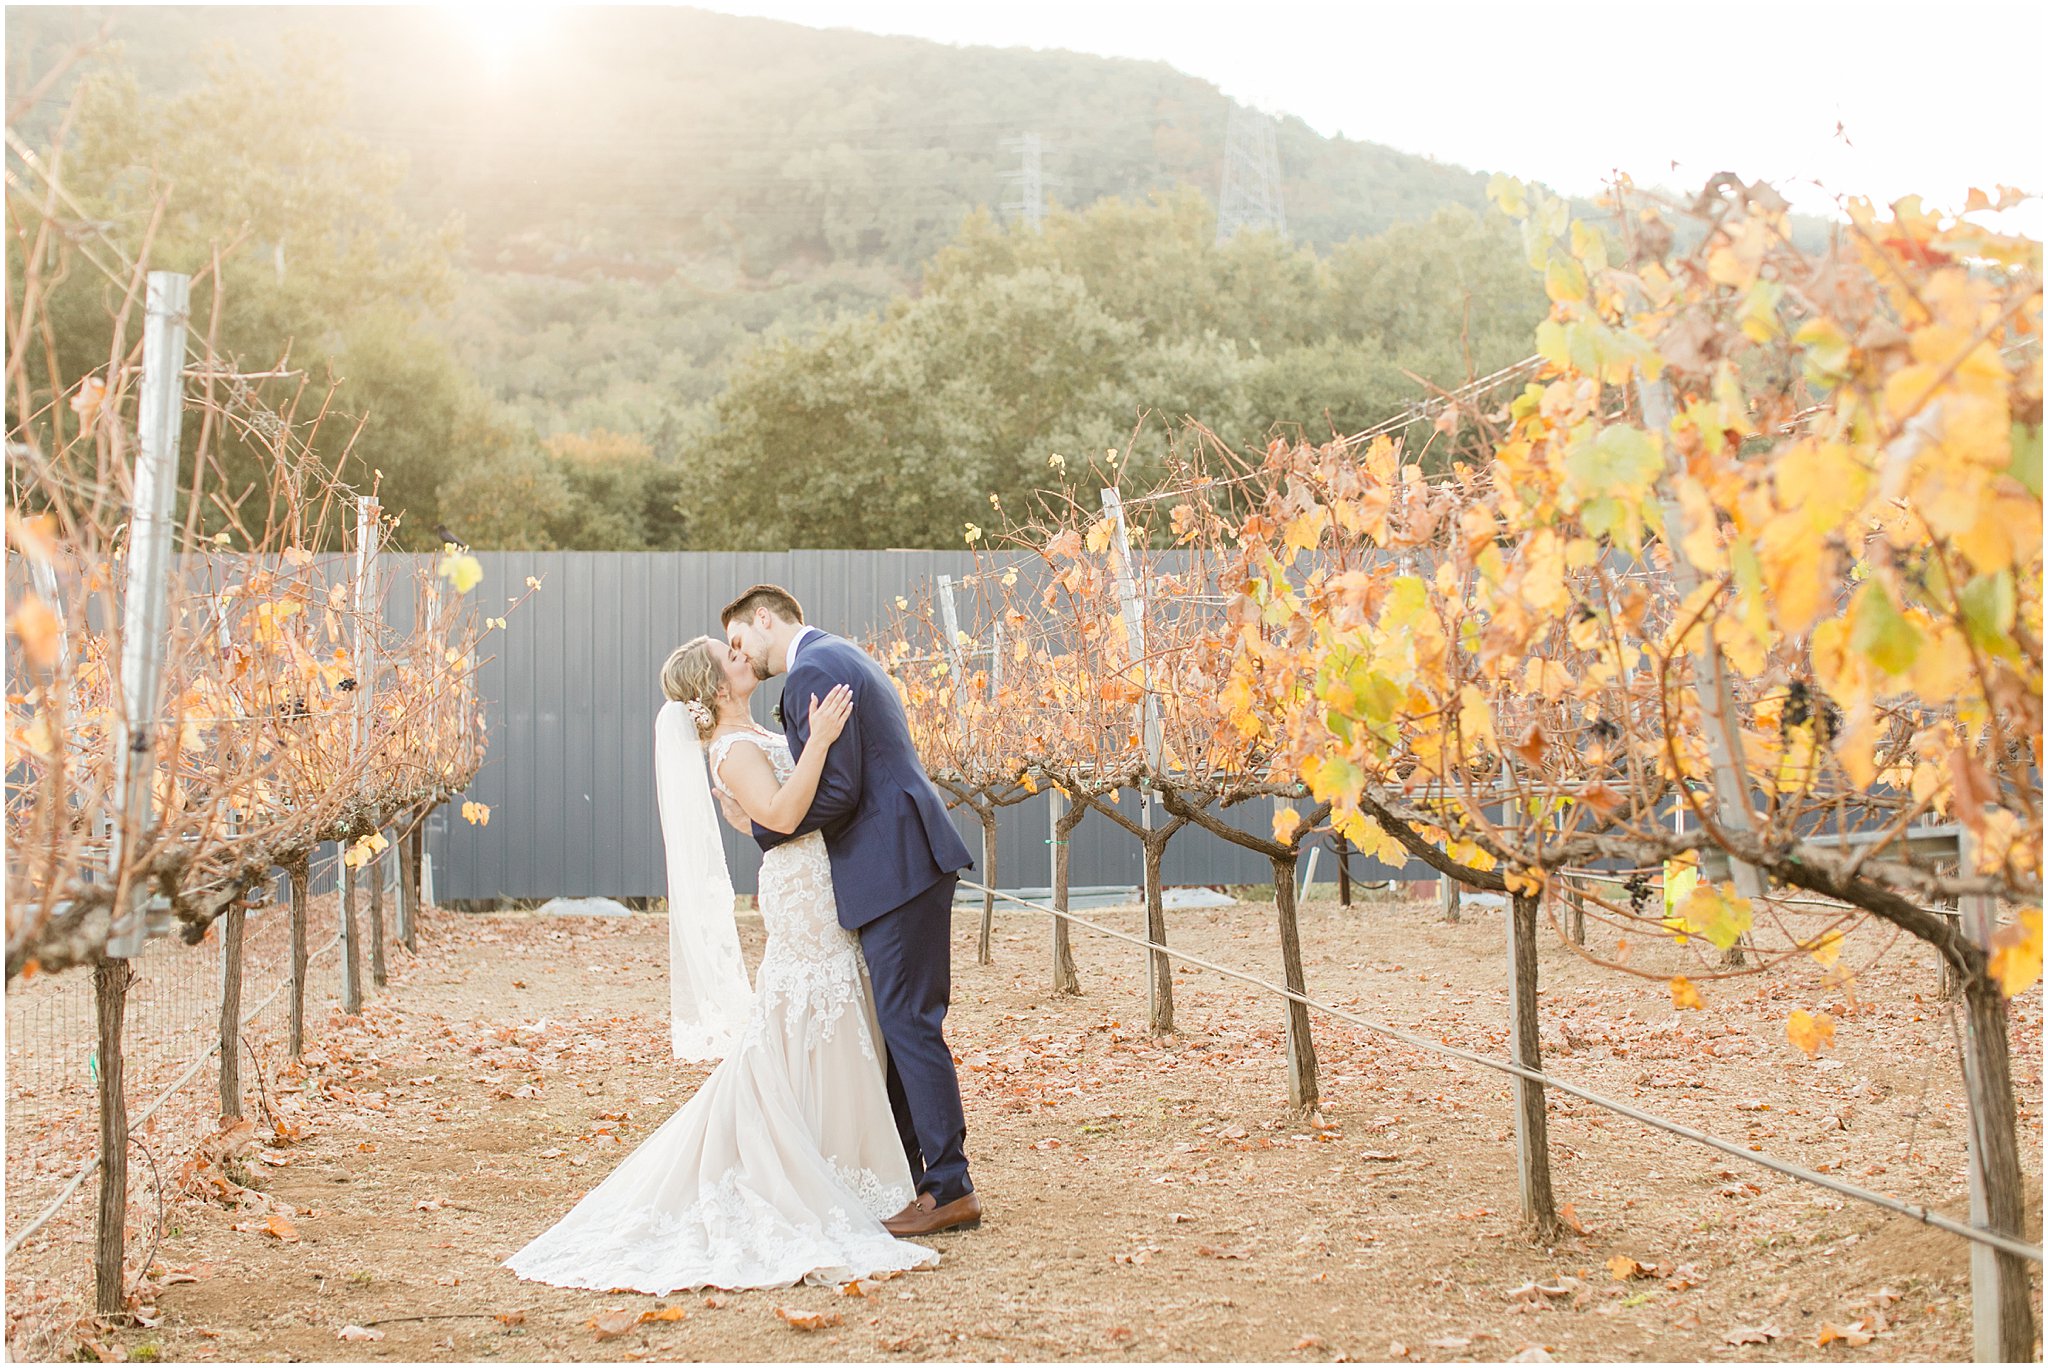 Sycamore Creek Vineyards Wedding - Live Love Leal - Fall Wedding - Bay Area Wedding Photographer - Angela Sue Photography_0147.jpg